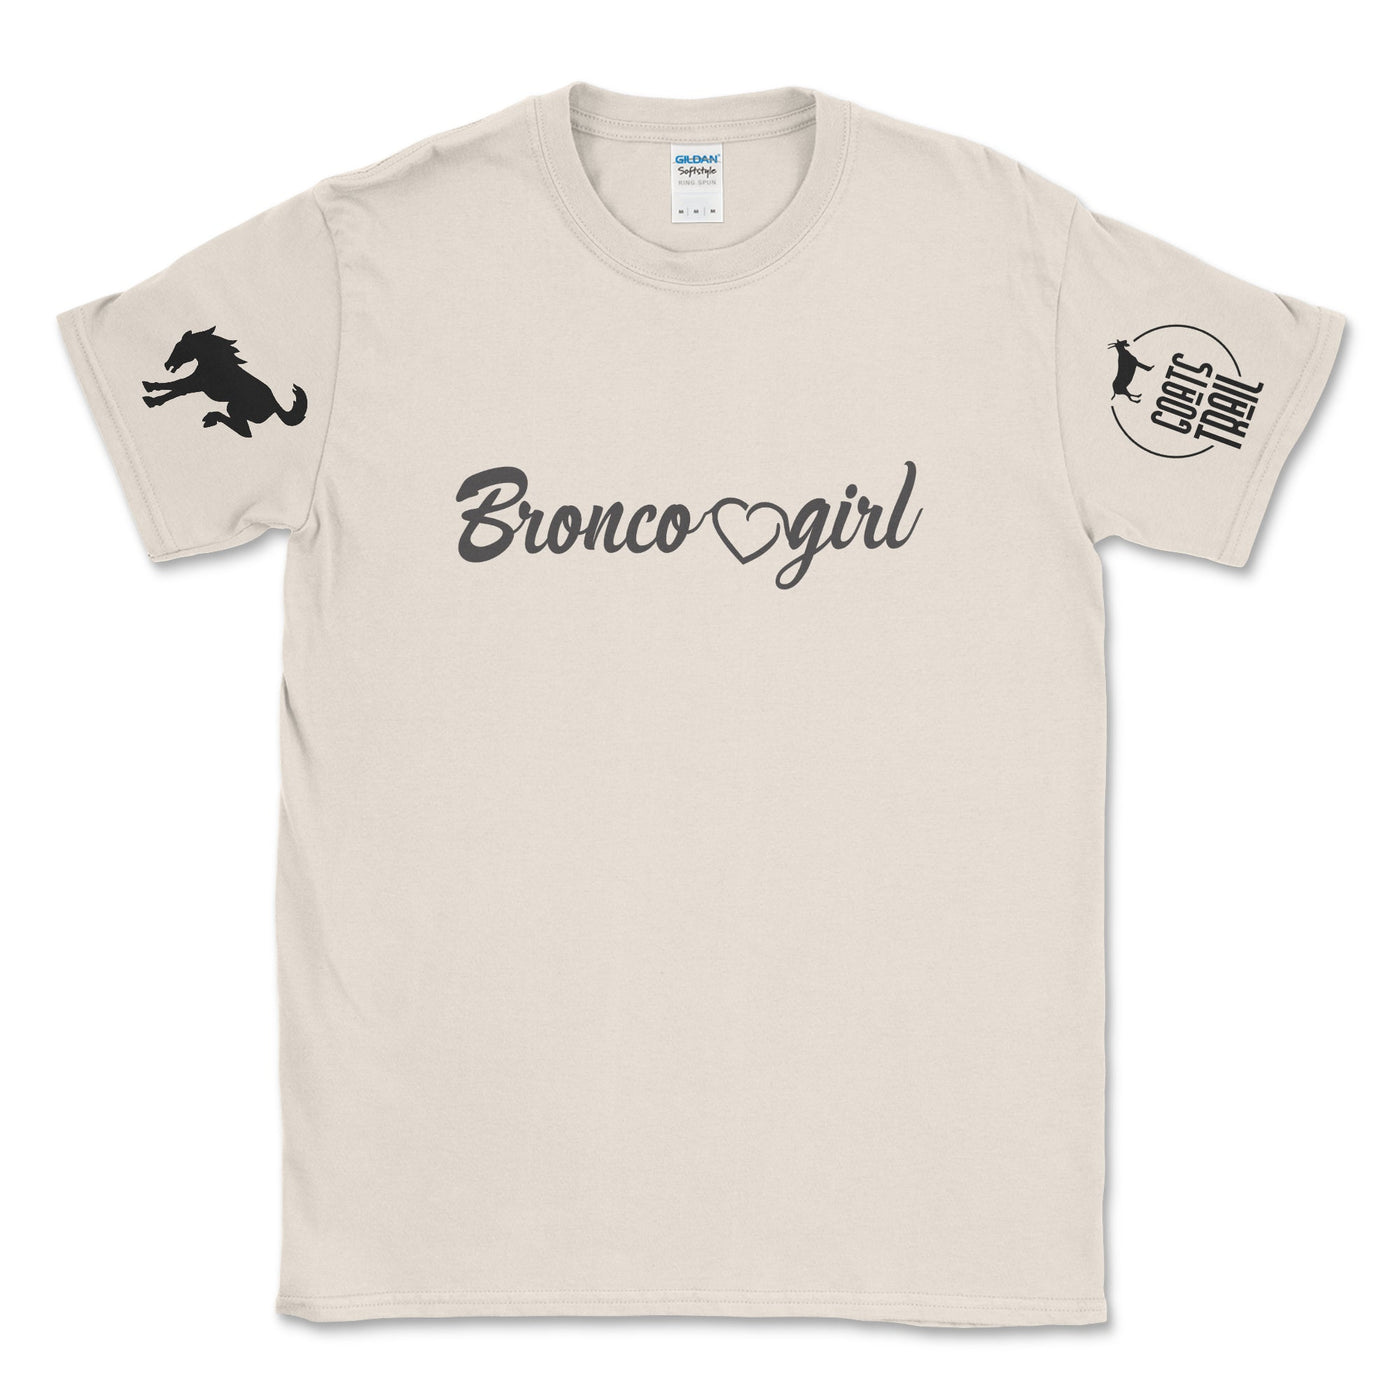 Bronco Girls Tee - Goats Trail